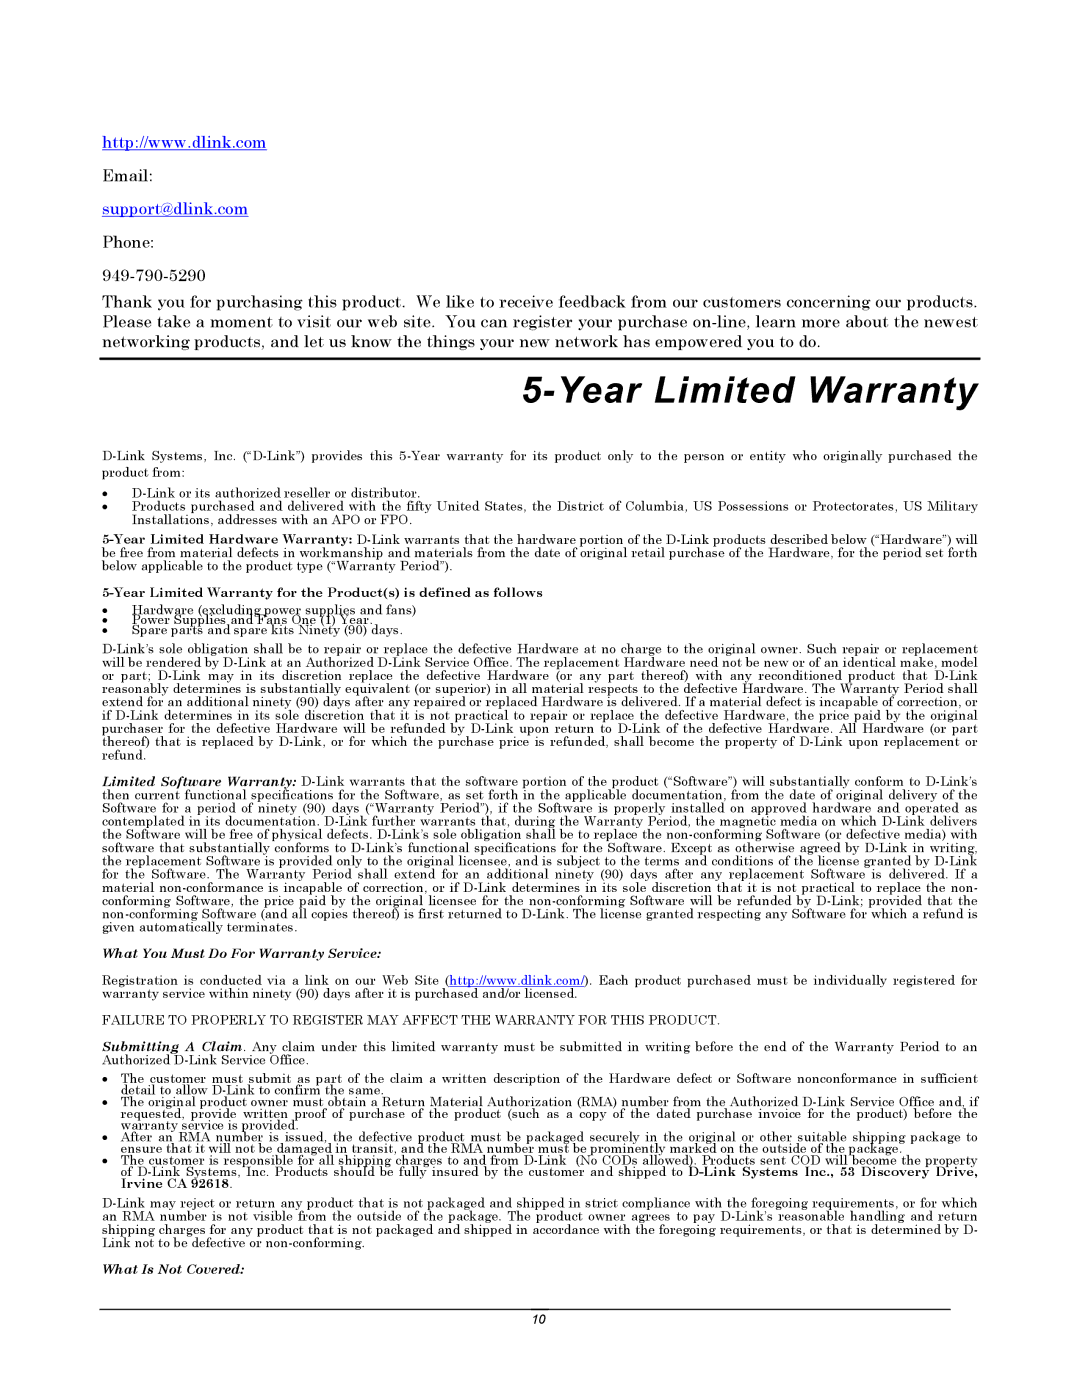 D-Link DCM-200 manual Year Limited Warranty, Support@dlink.com 